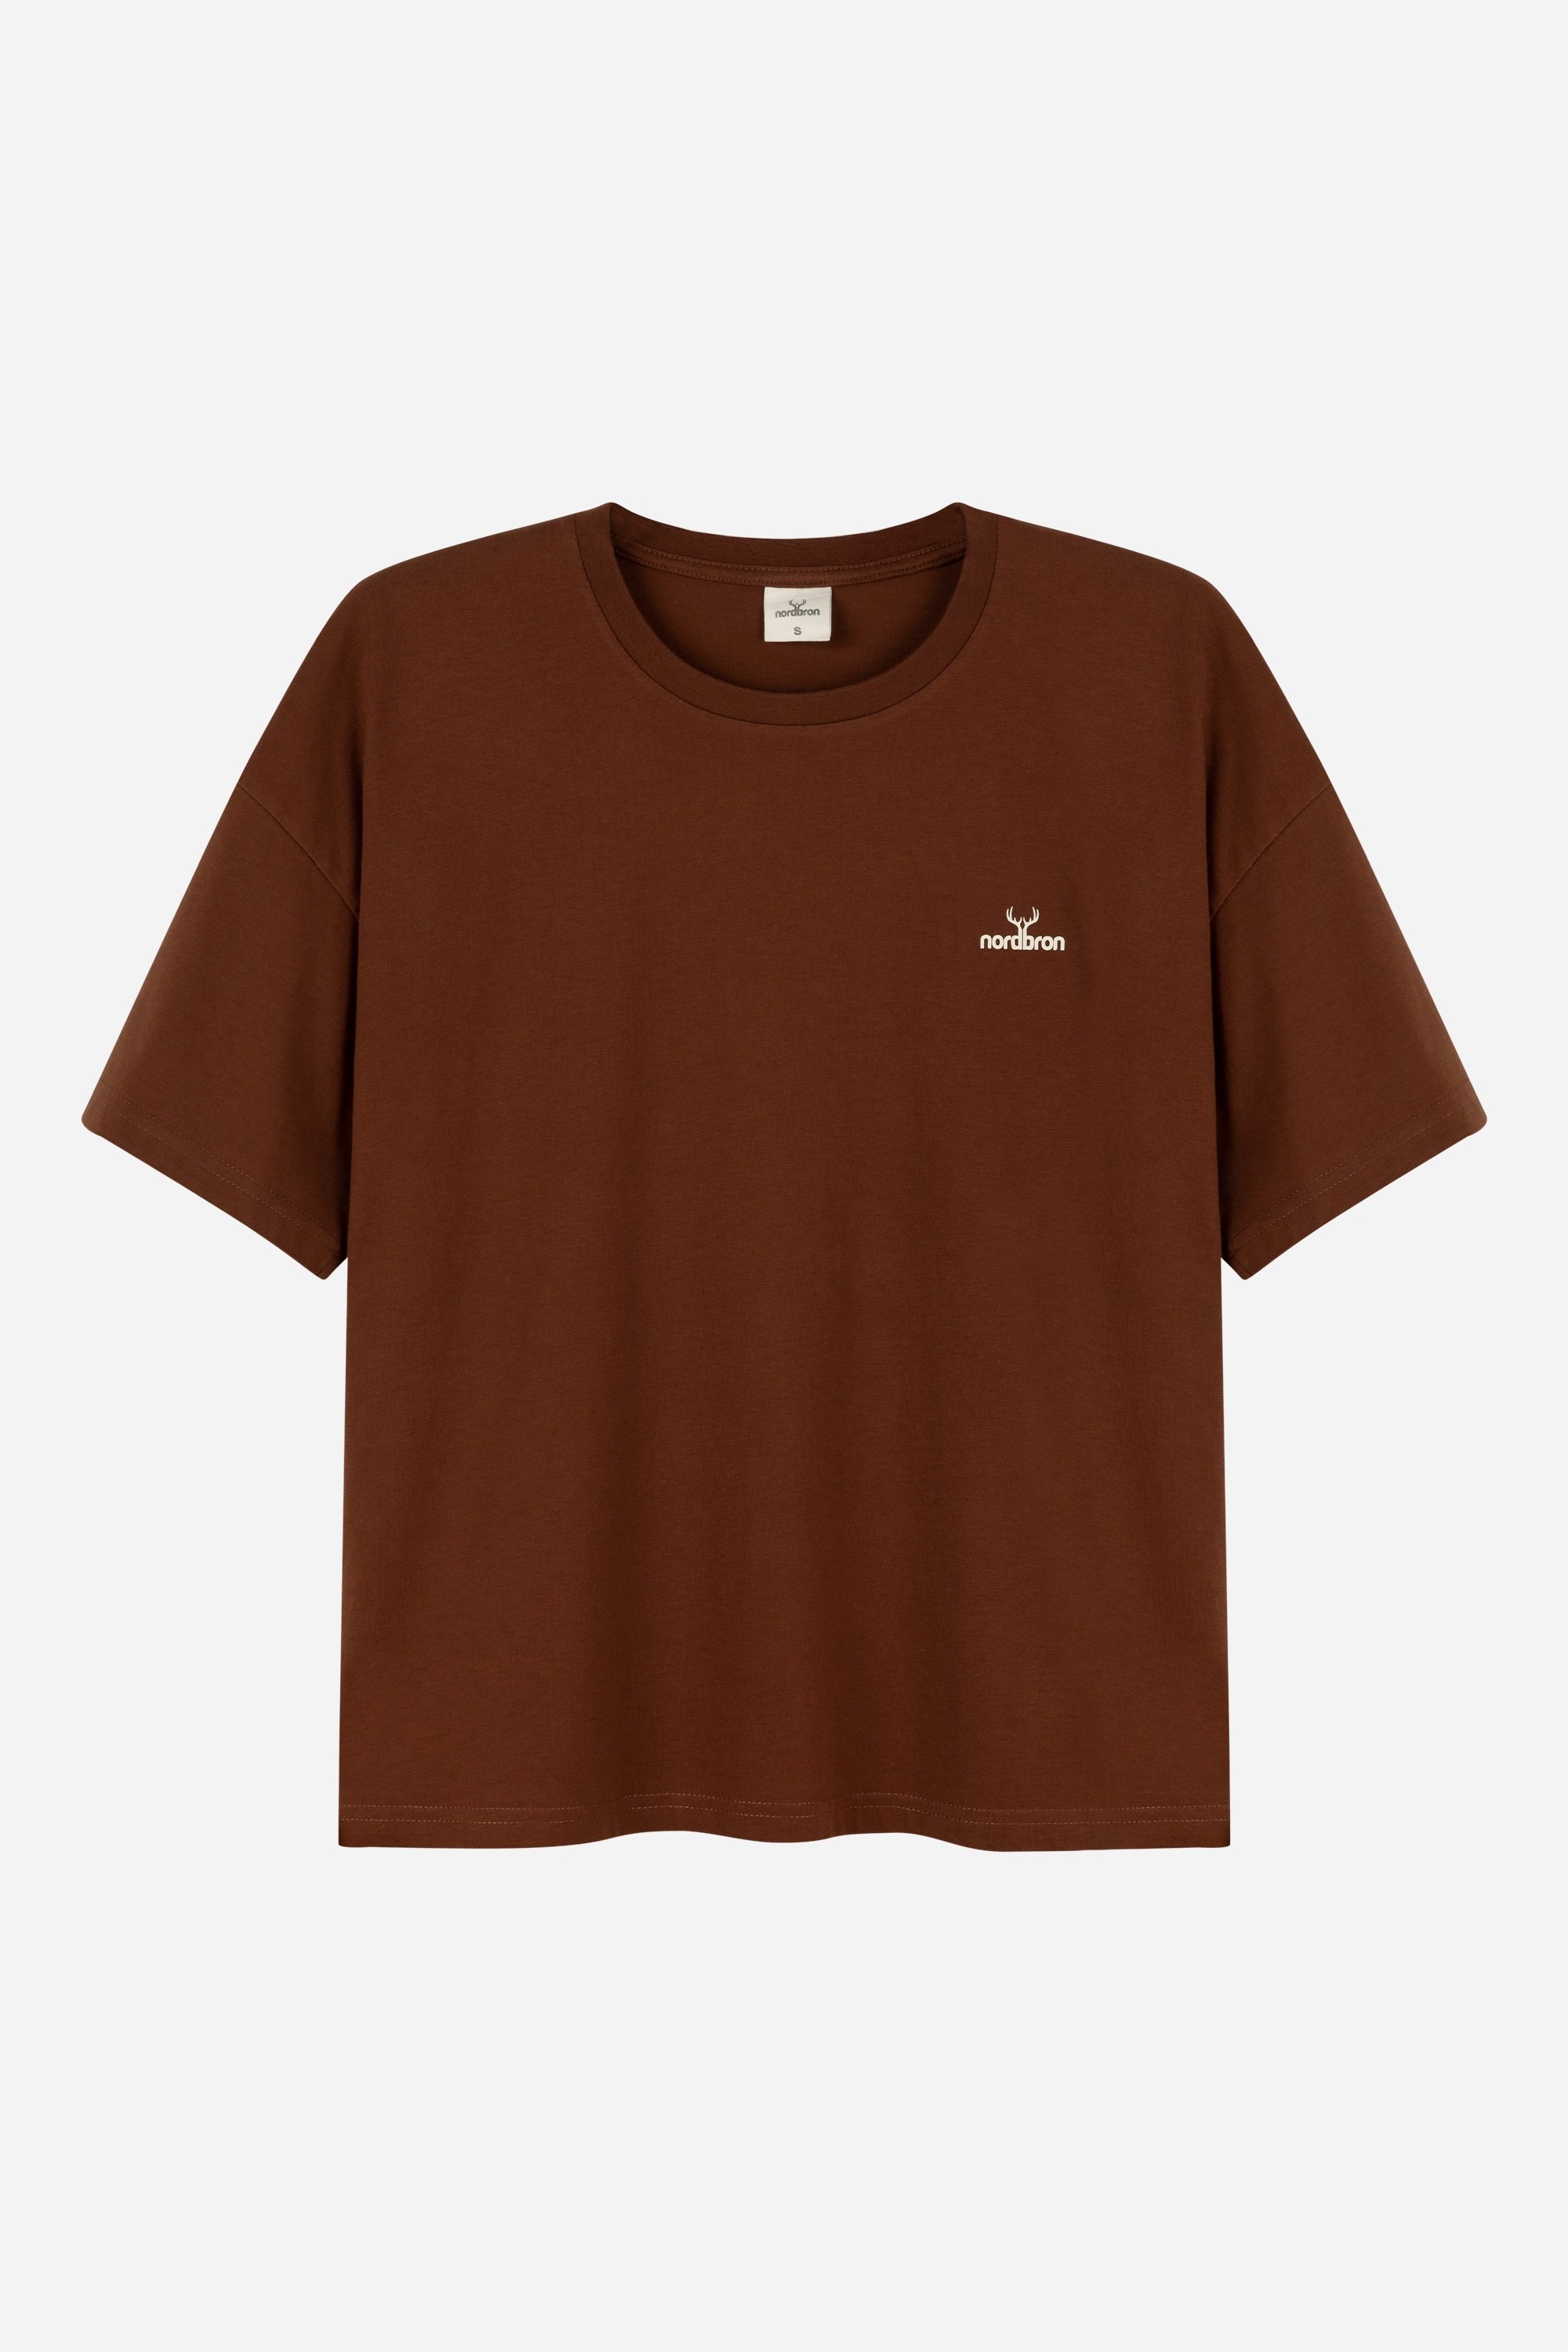 Kramer Nordbron Oversize T-shirt - Brown